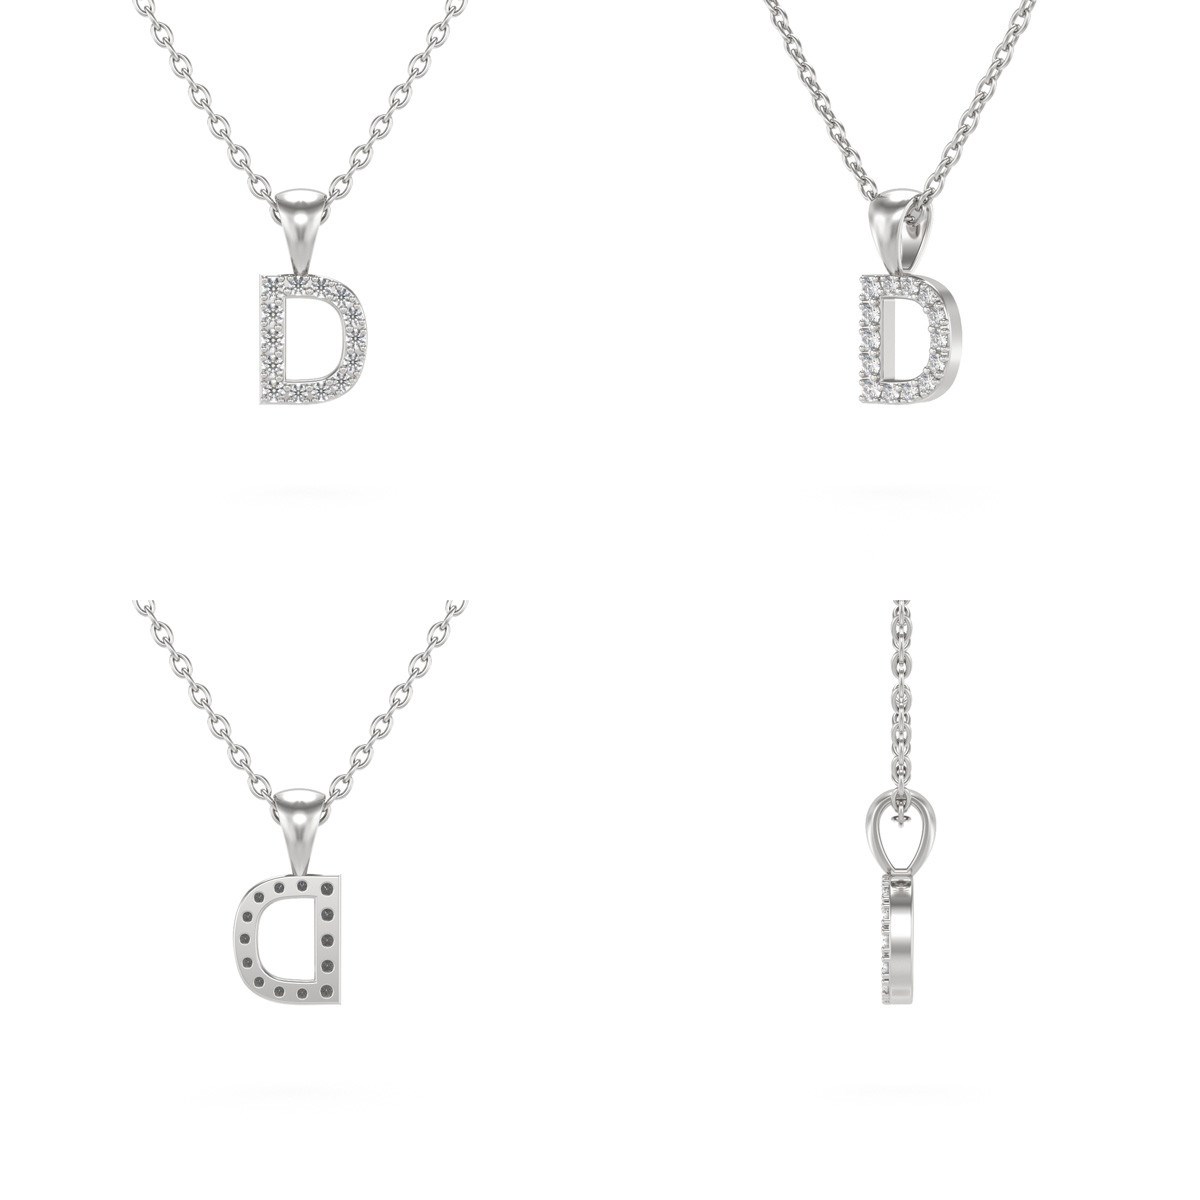 Collier Pendentif ADEN Lettre D Or 750 Blanc Diamant Chaine Or 750 incluse 0.72grs - vue 2